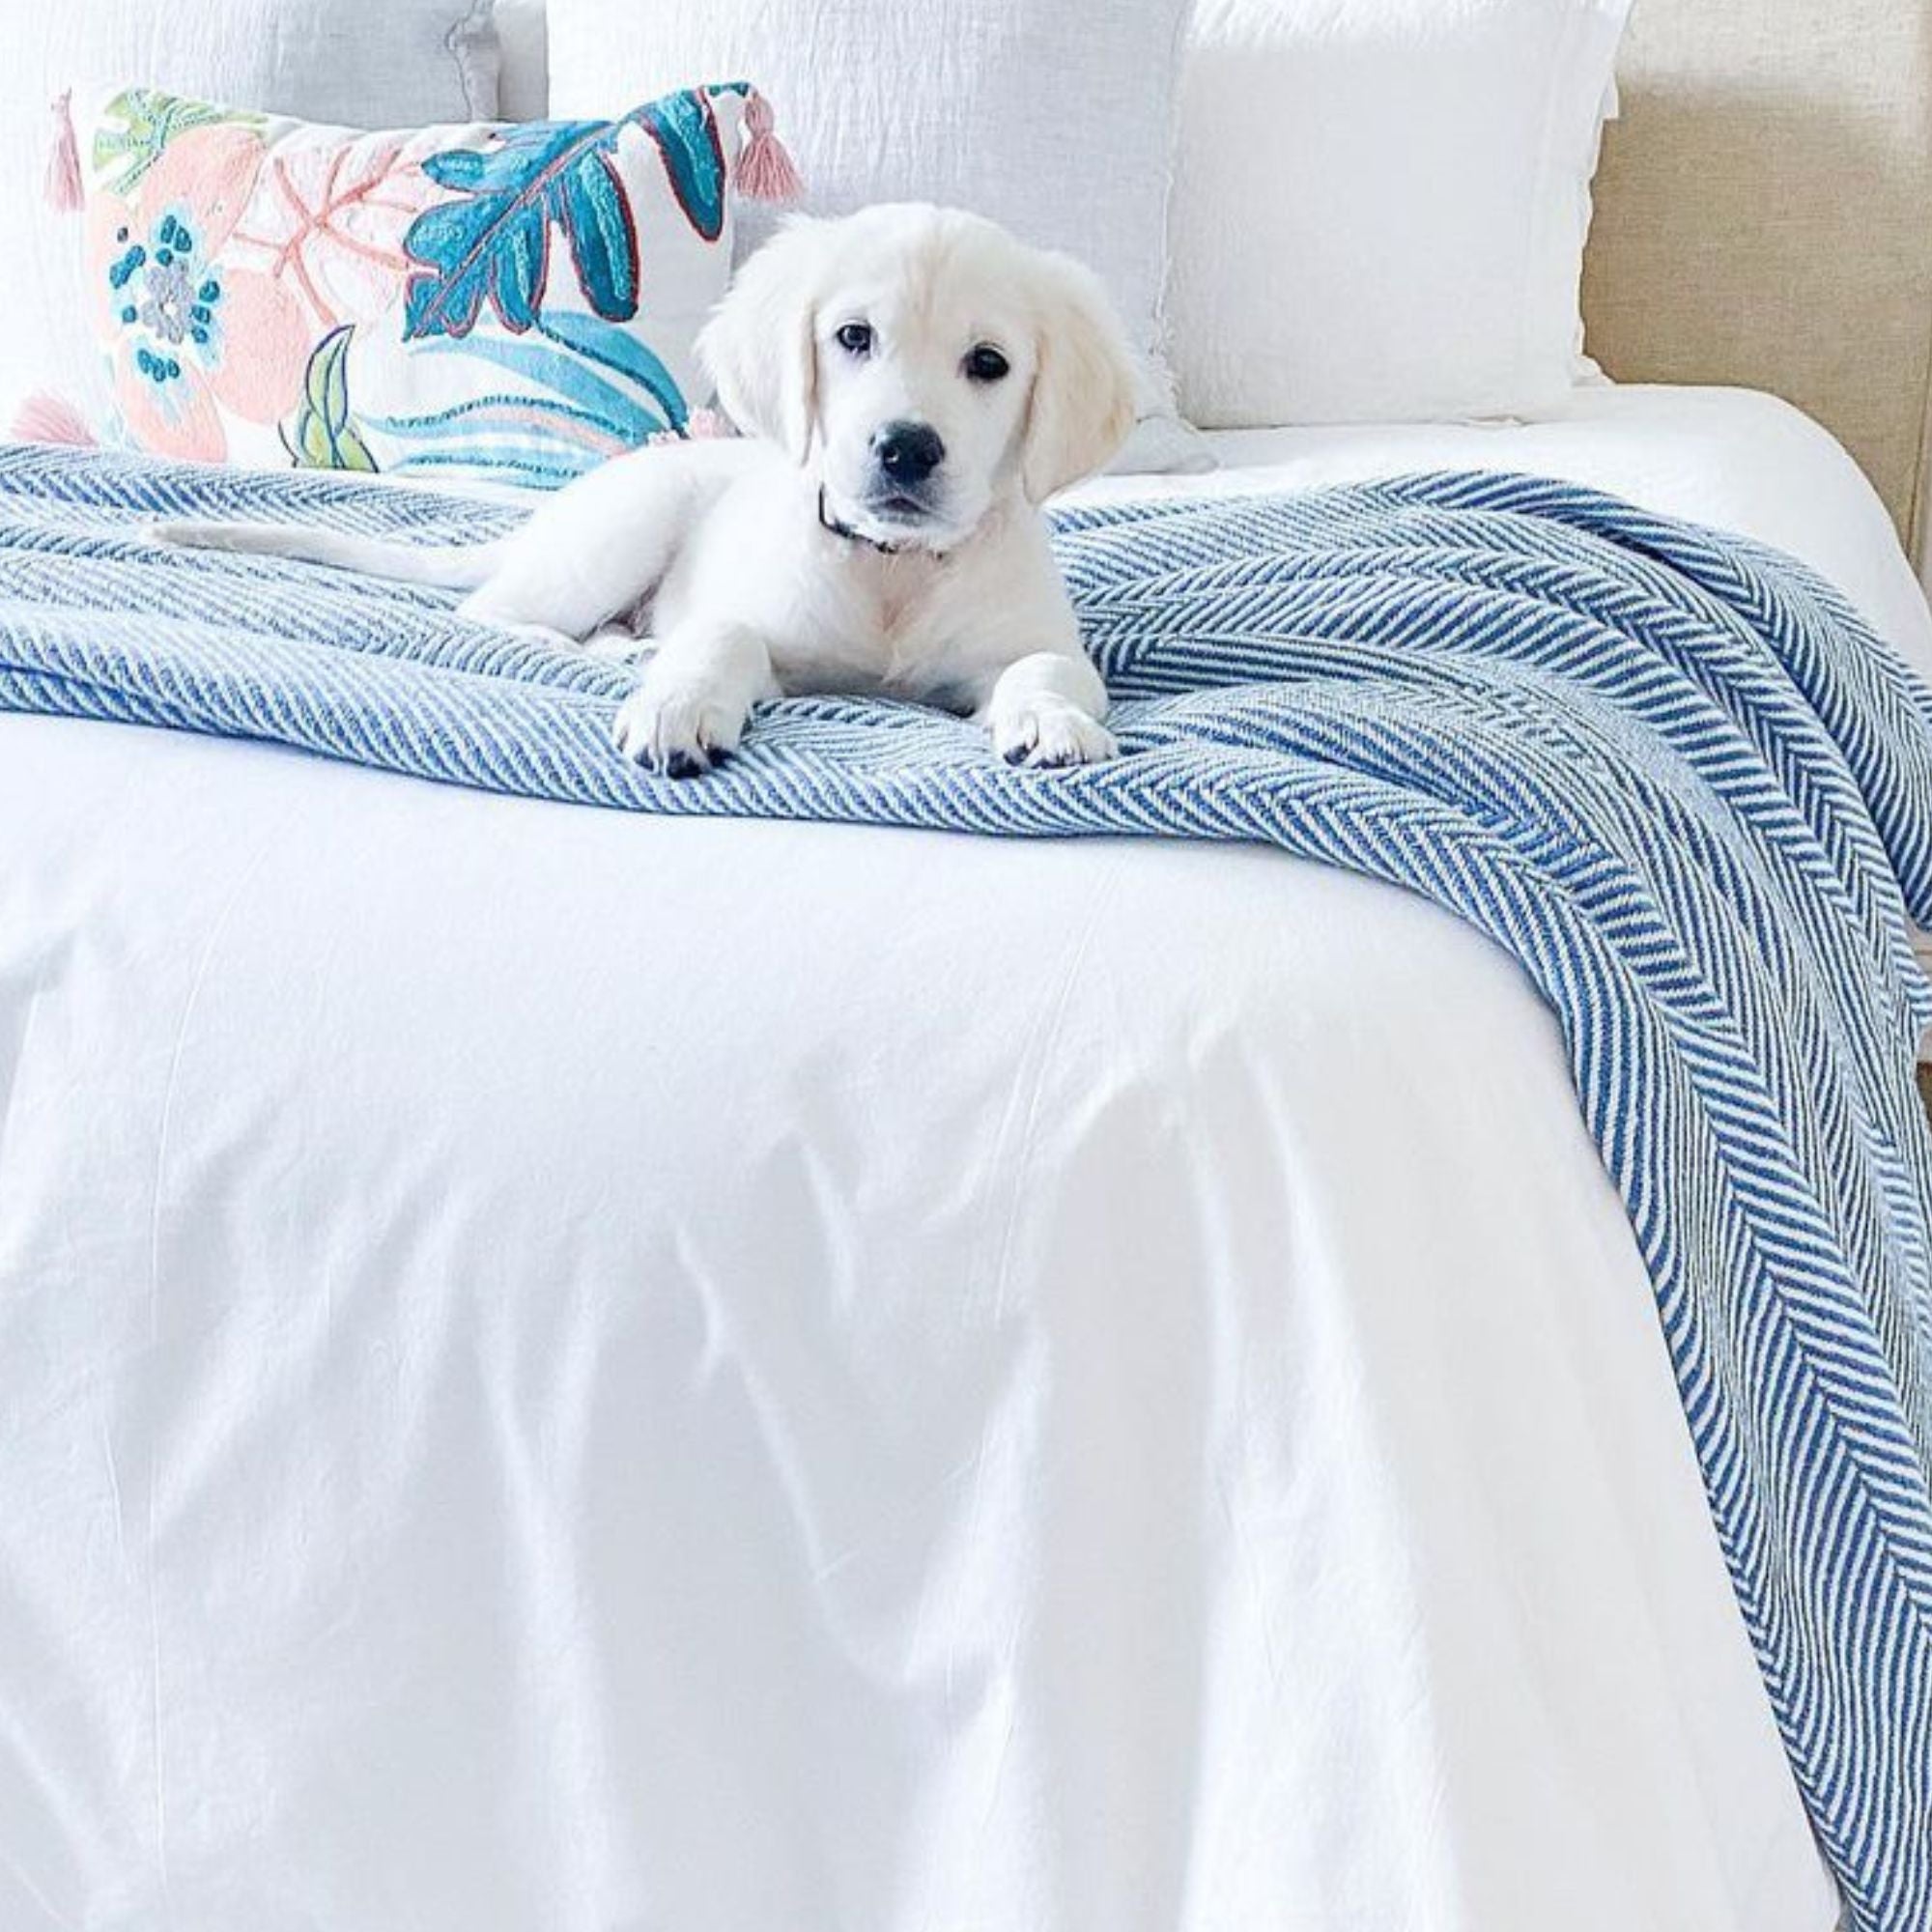 cute golden retriever puppy on a blue cotton blanket